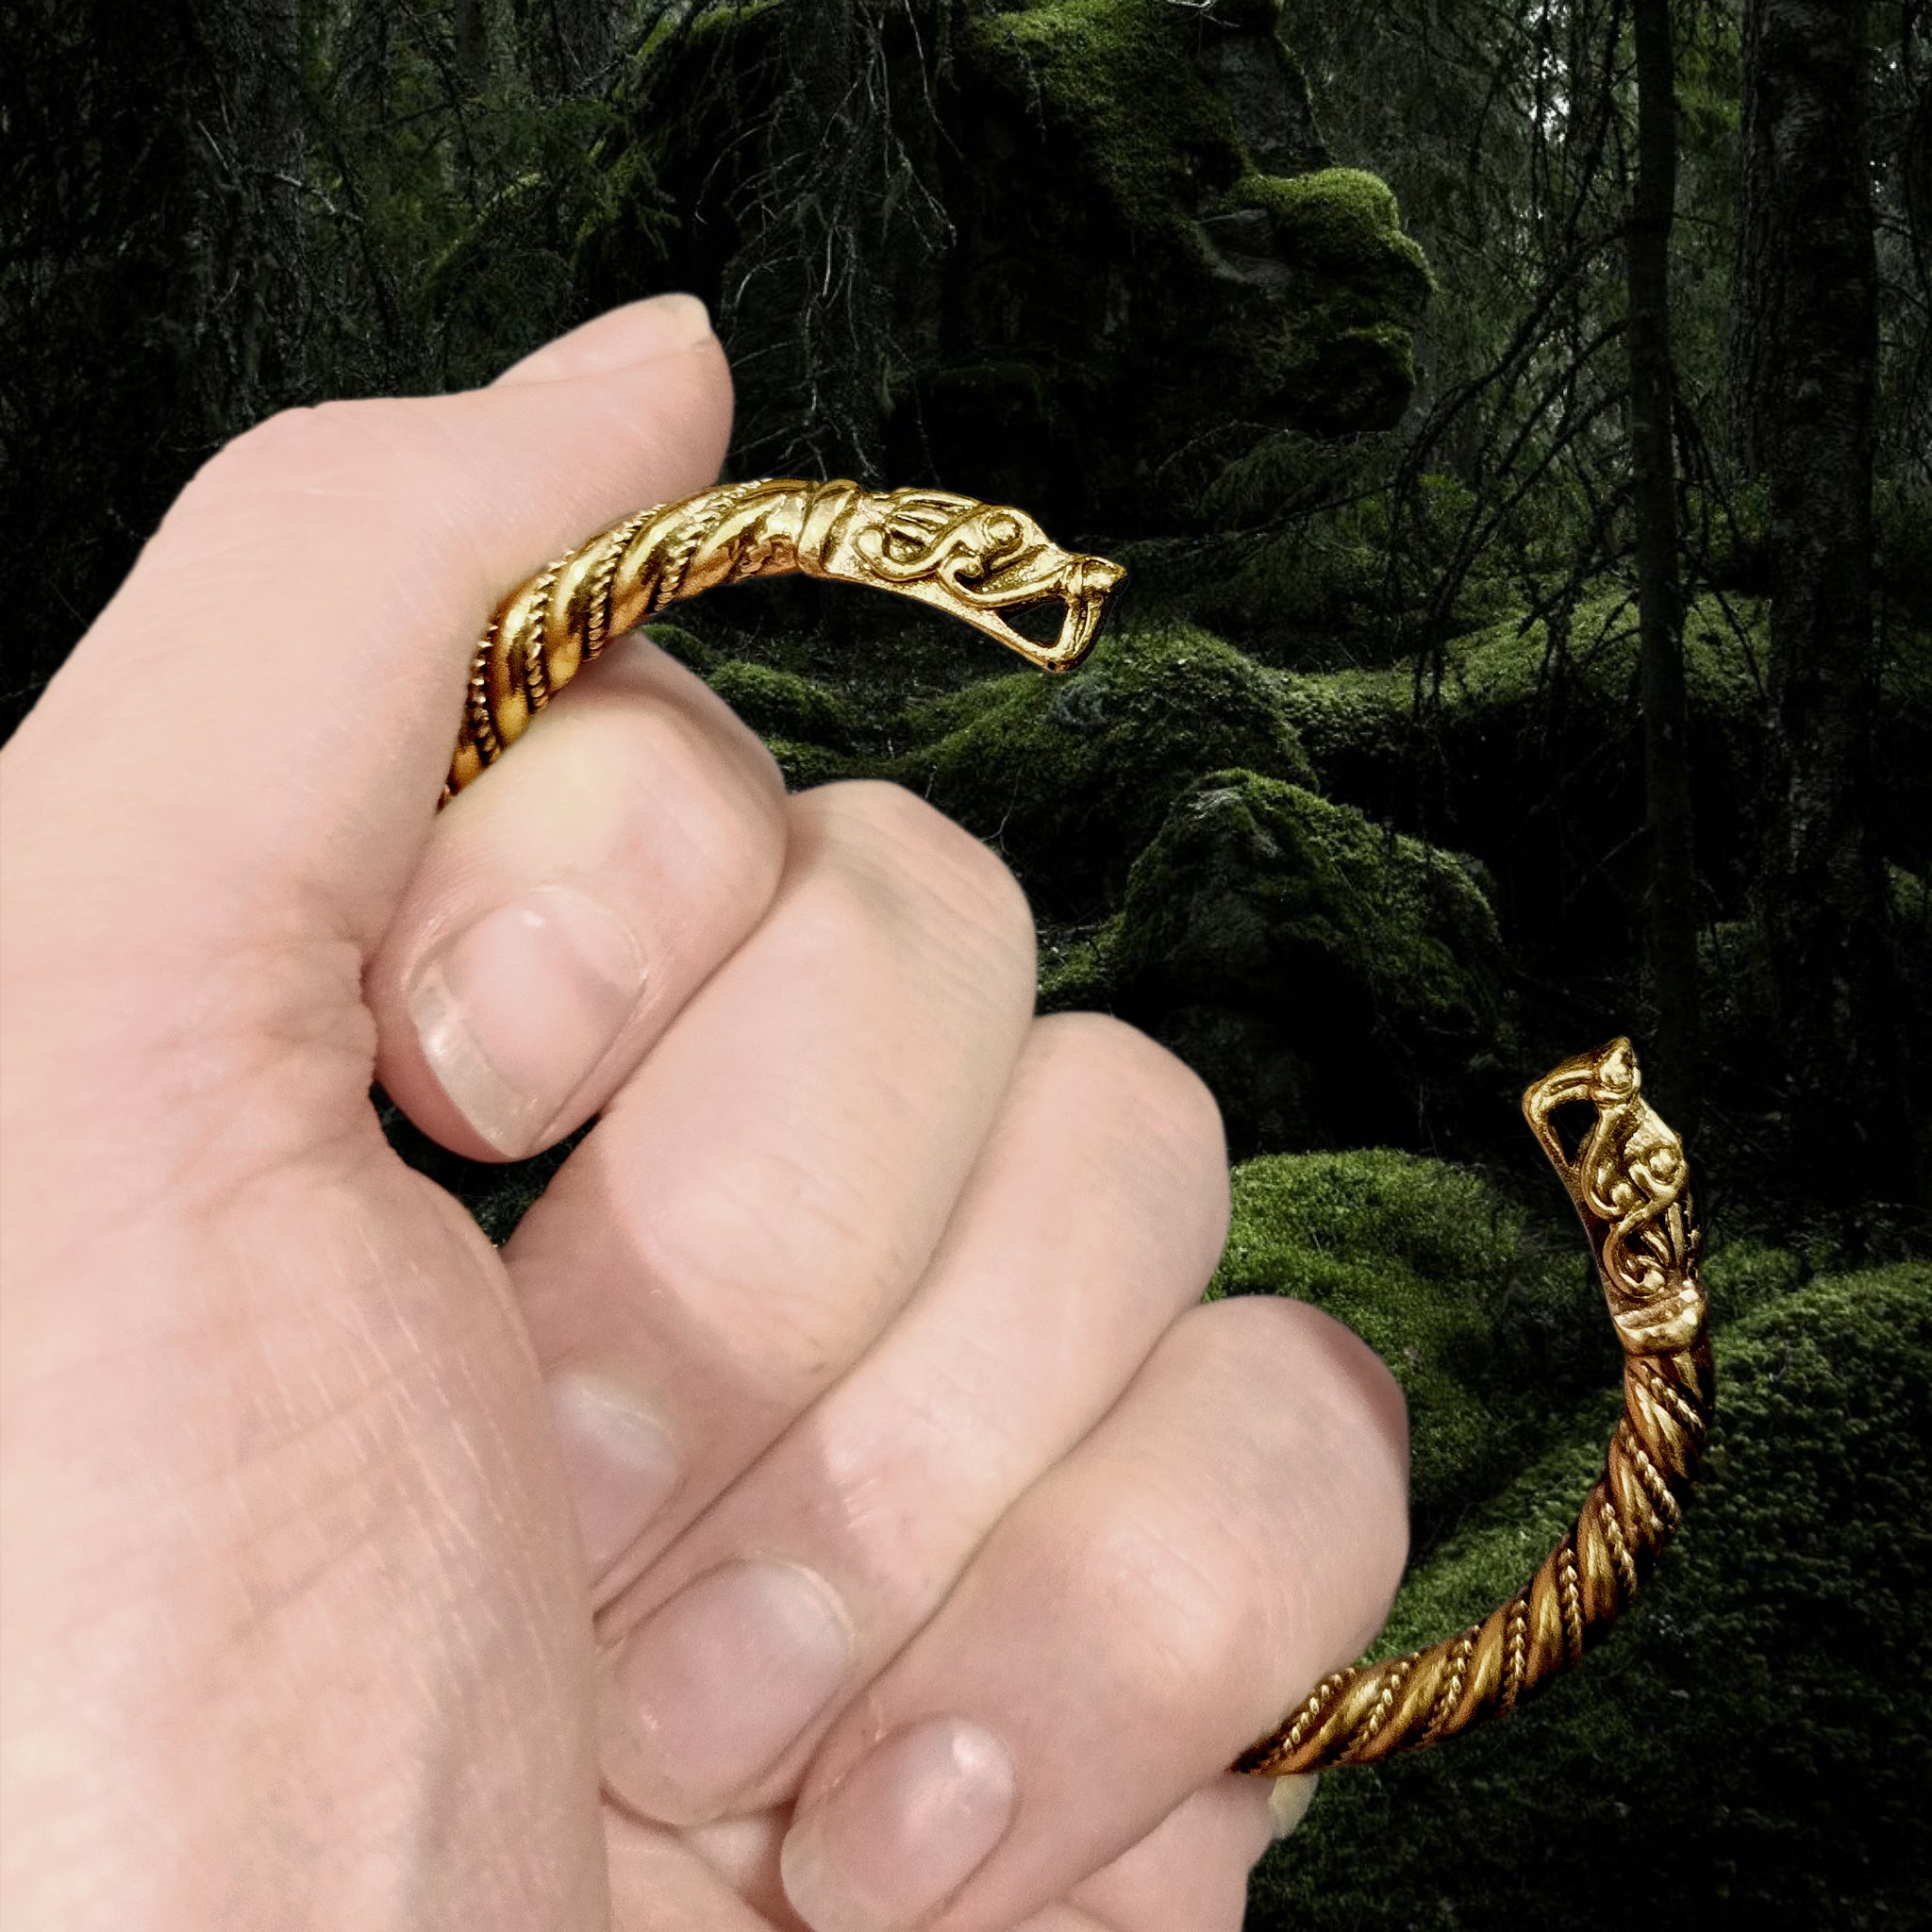 Handmade Twisted Bronze Bracelet With Gotlandic Dragon Heads in Hand